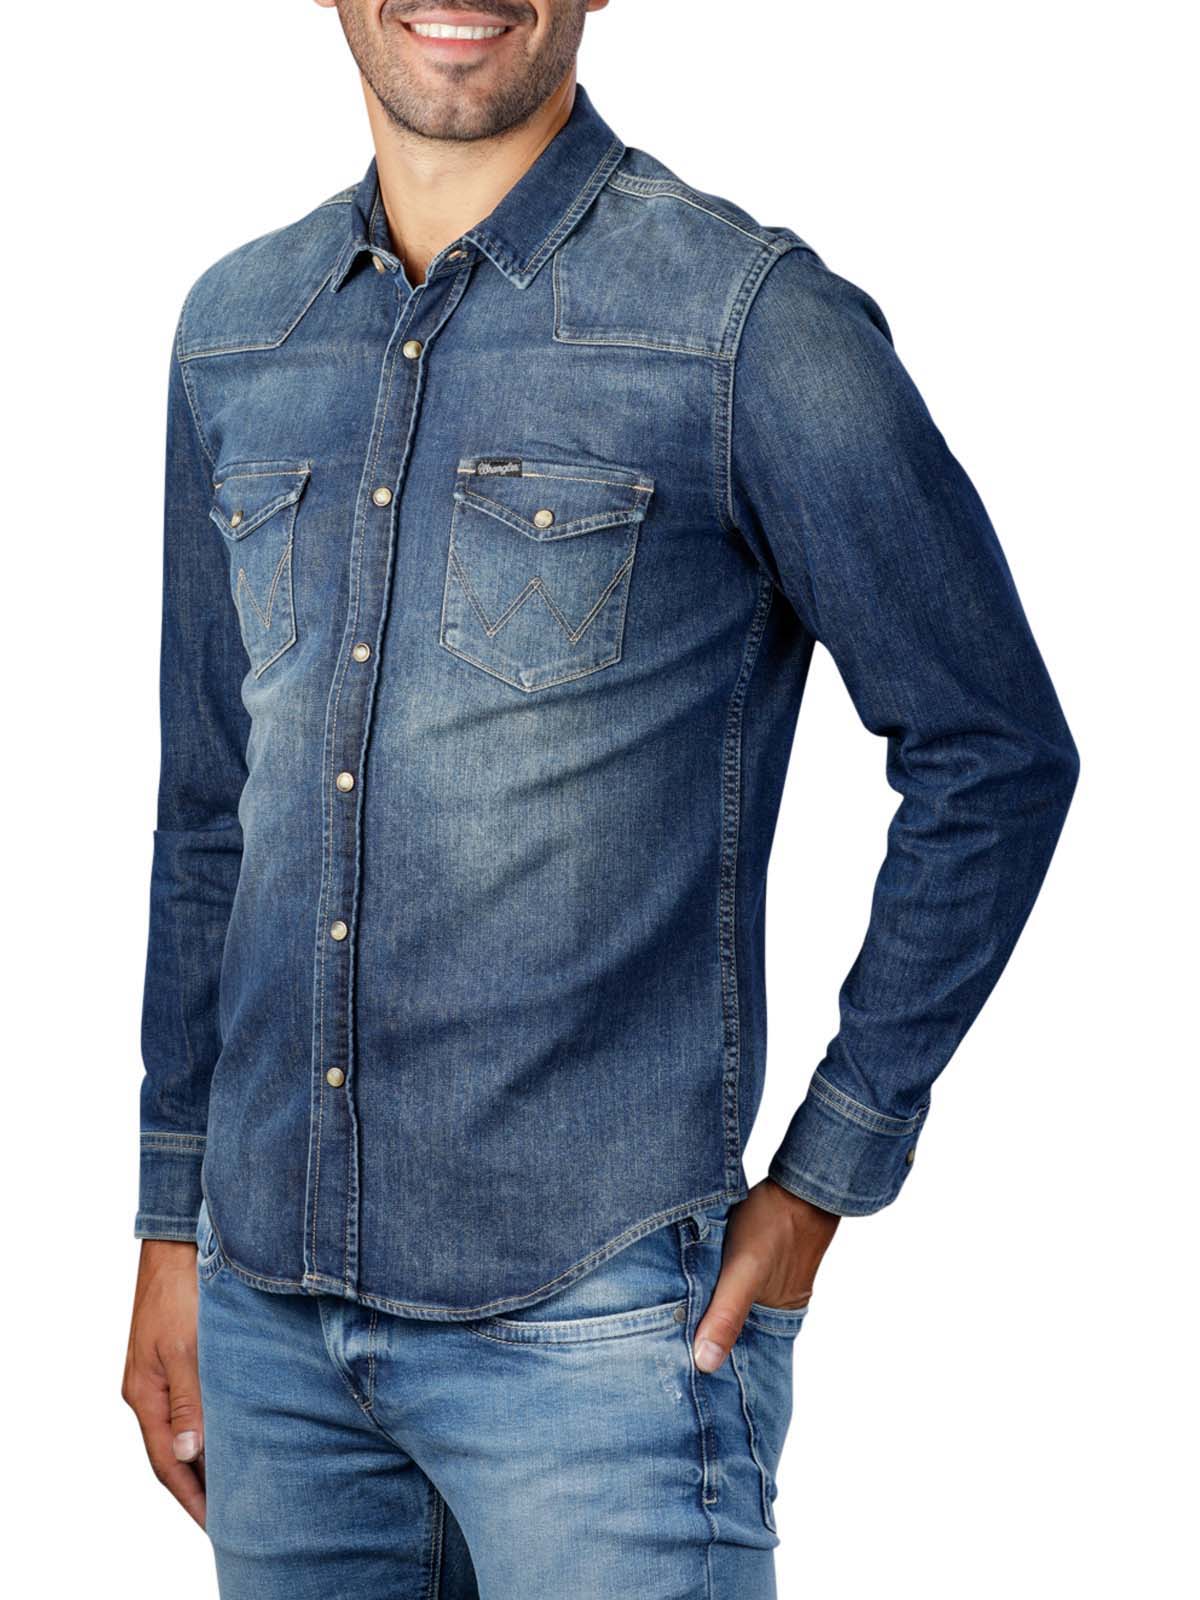 Wrangler Western Denim Shirt mid indigo Wrangler Men's Shirt | Free  Shipping on  - SIMPLY LOOK GOOD